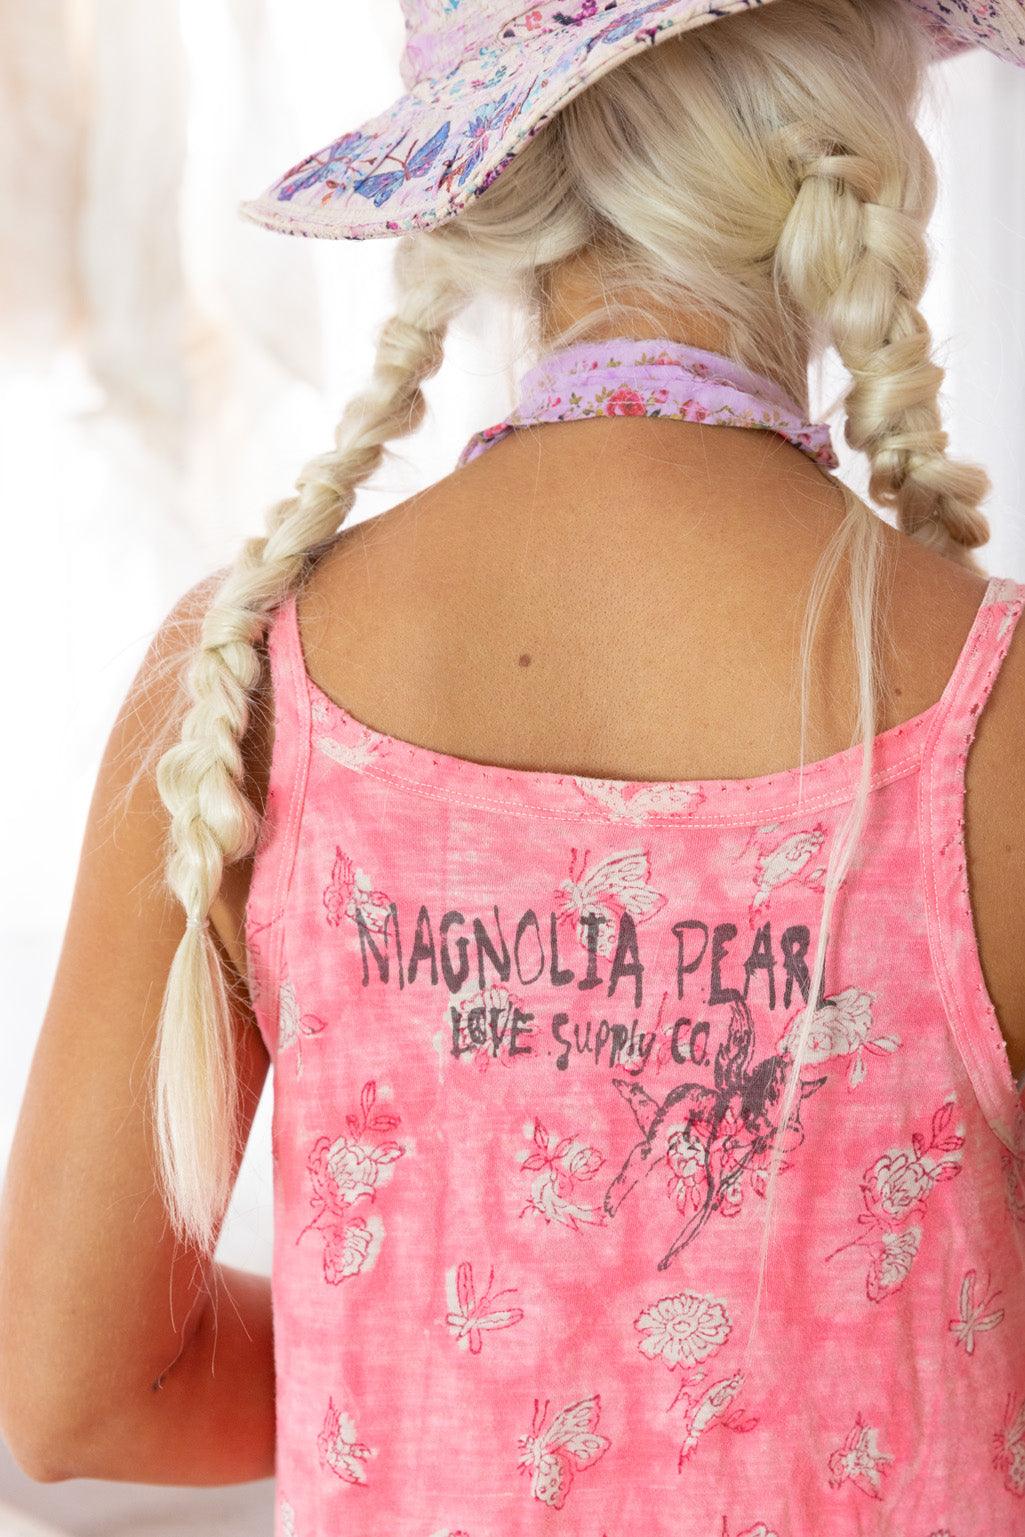 Lana Tank Dress - Magnolia Pearl Clothing